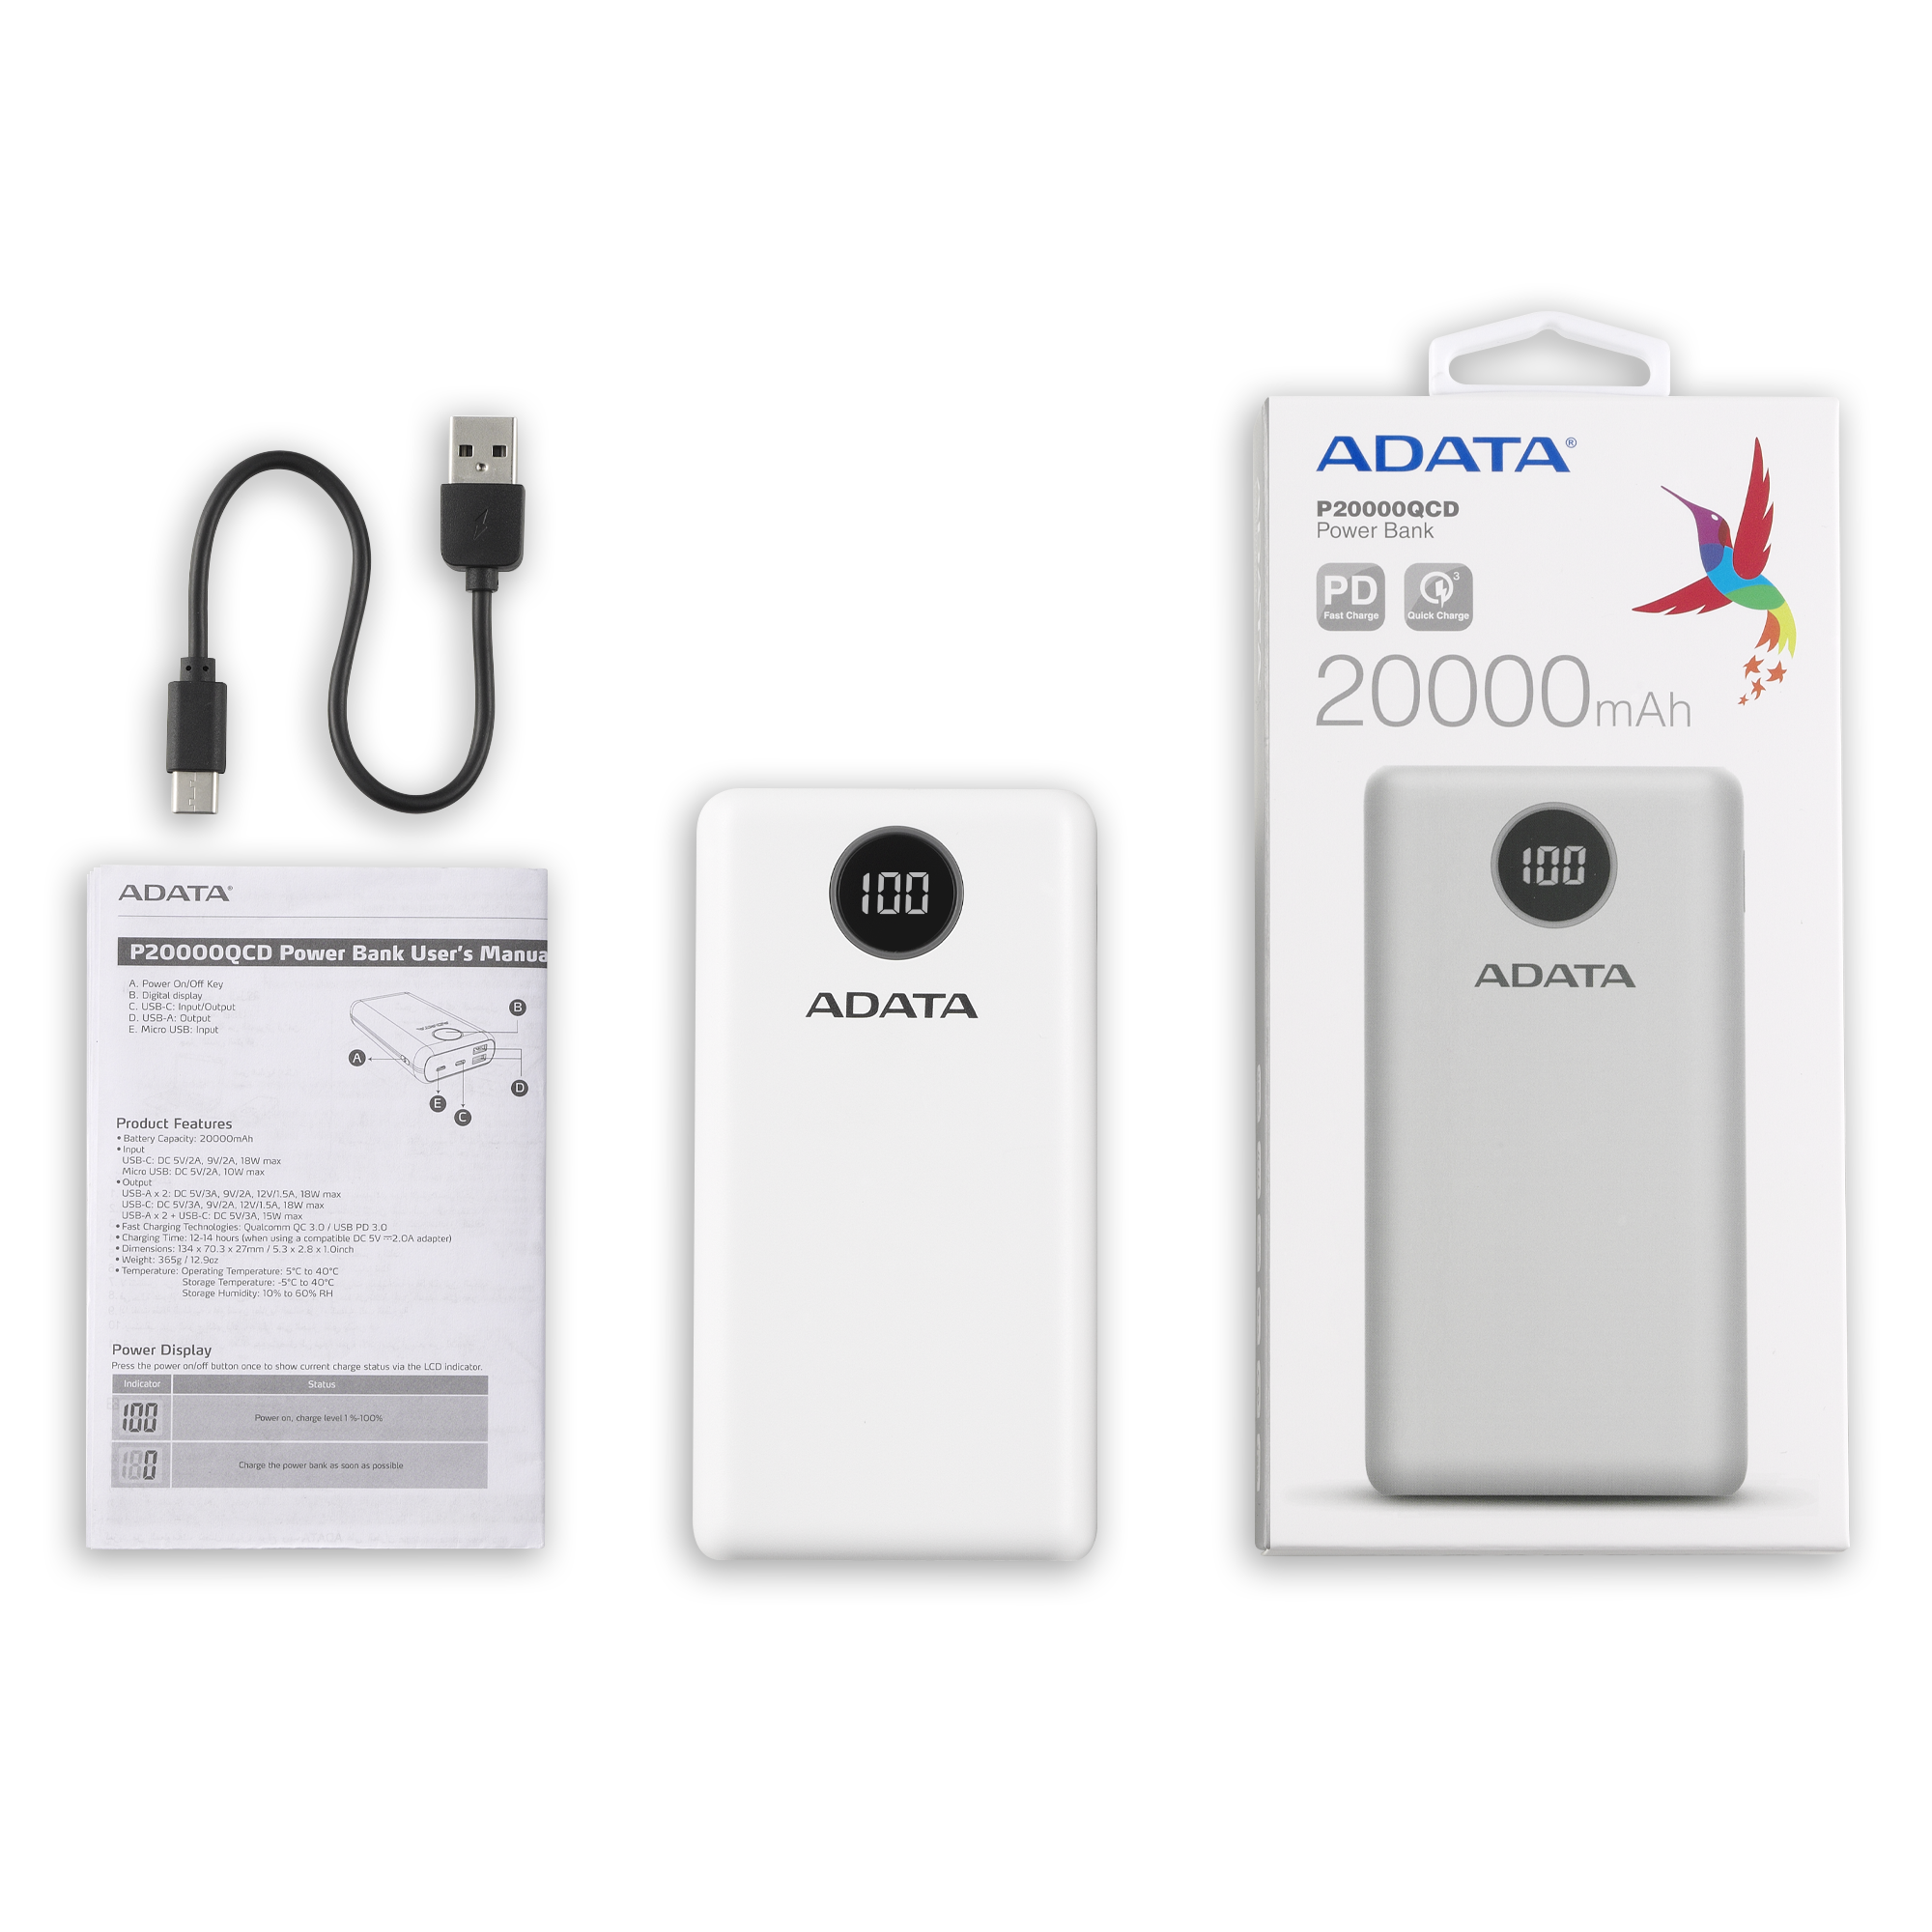 Power Bank 20000MAH ADATA P20000QCD Bateria Portatil Tipo C